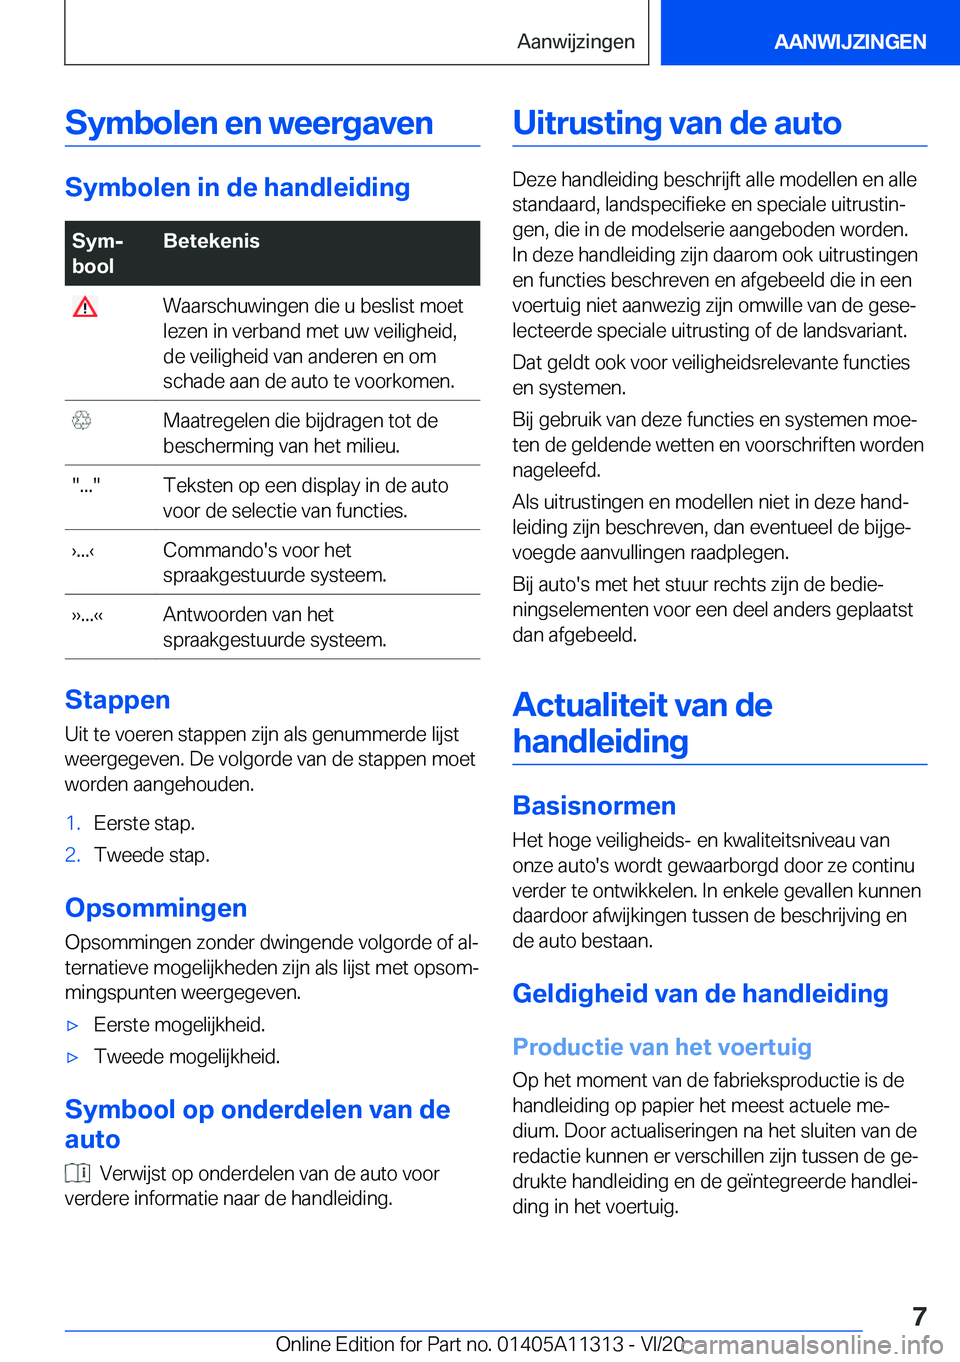 BMW 5 SERIES 2021  Instructieboekjes (in Dutch) �S�y�m�b�o�l�e�n��e�n��w�e�e�r�g�a�v�e�n
�S�y�m�b�o�l�e�n��i�n��d�e��h�a�n�d�l�e�i�d�i�n�g
�S�y�mj
�b�o�o�l�B�e�t�e�k�e�n�i�s��W�a�a�r�s�c�h�u�w�i�n�g�e�n��d�i�e��u��b�e�s�l�i�s�t��m�o�e�t
